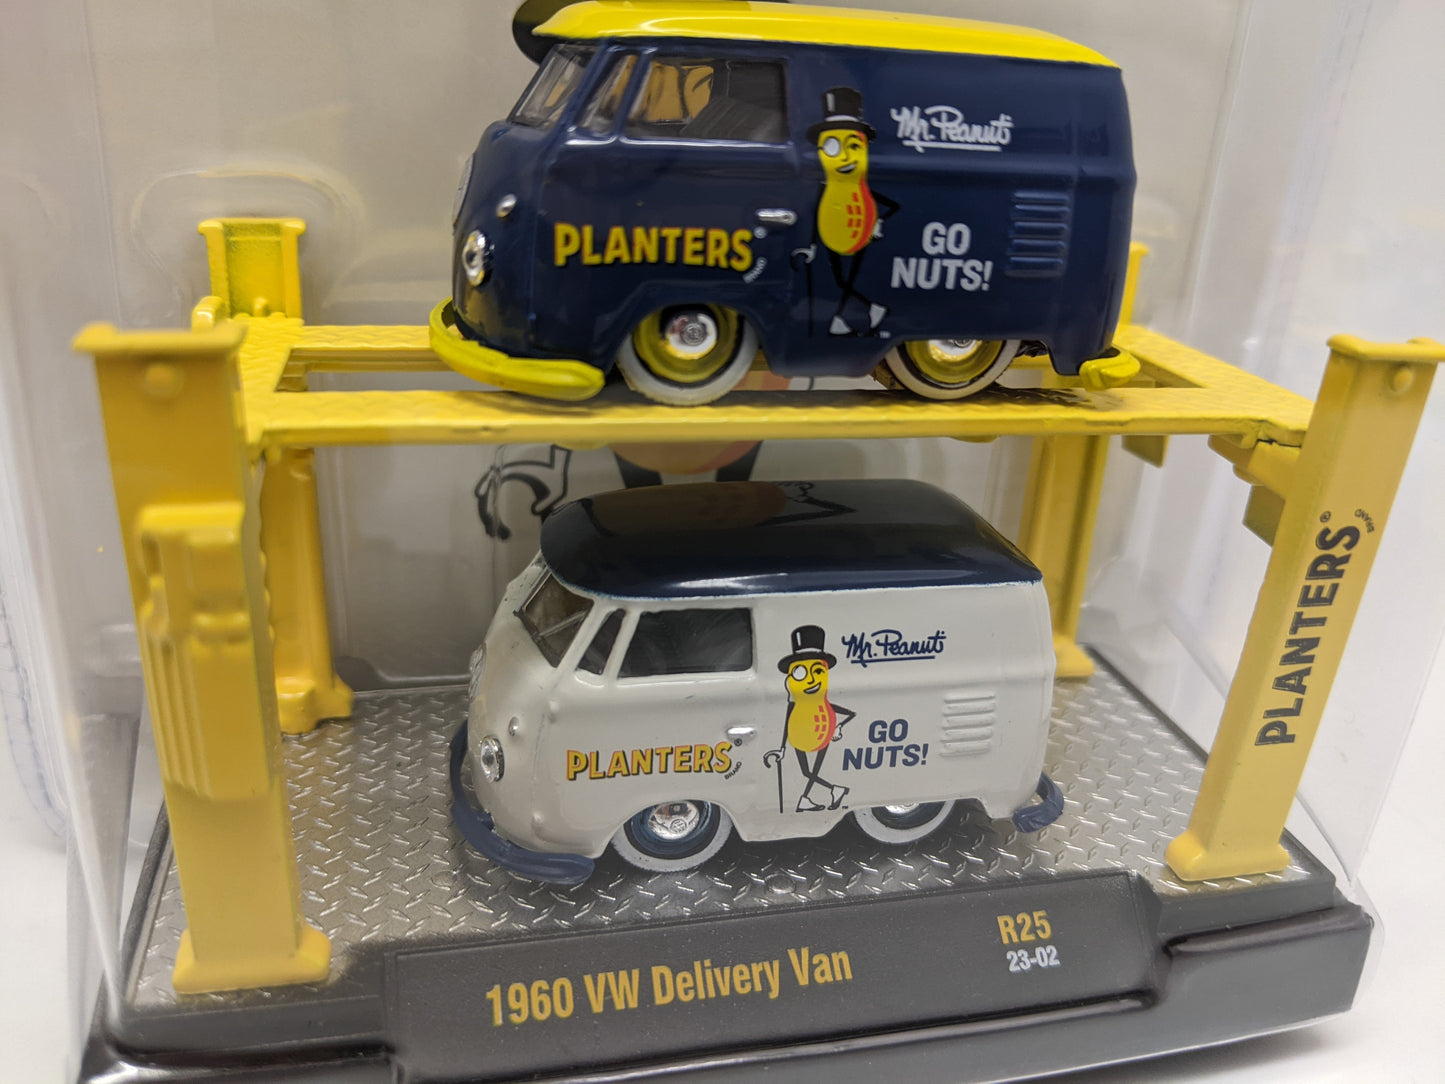 M2 1960 VW Delivery Van Auto Lift - Planters